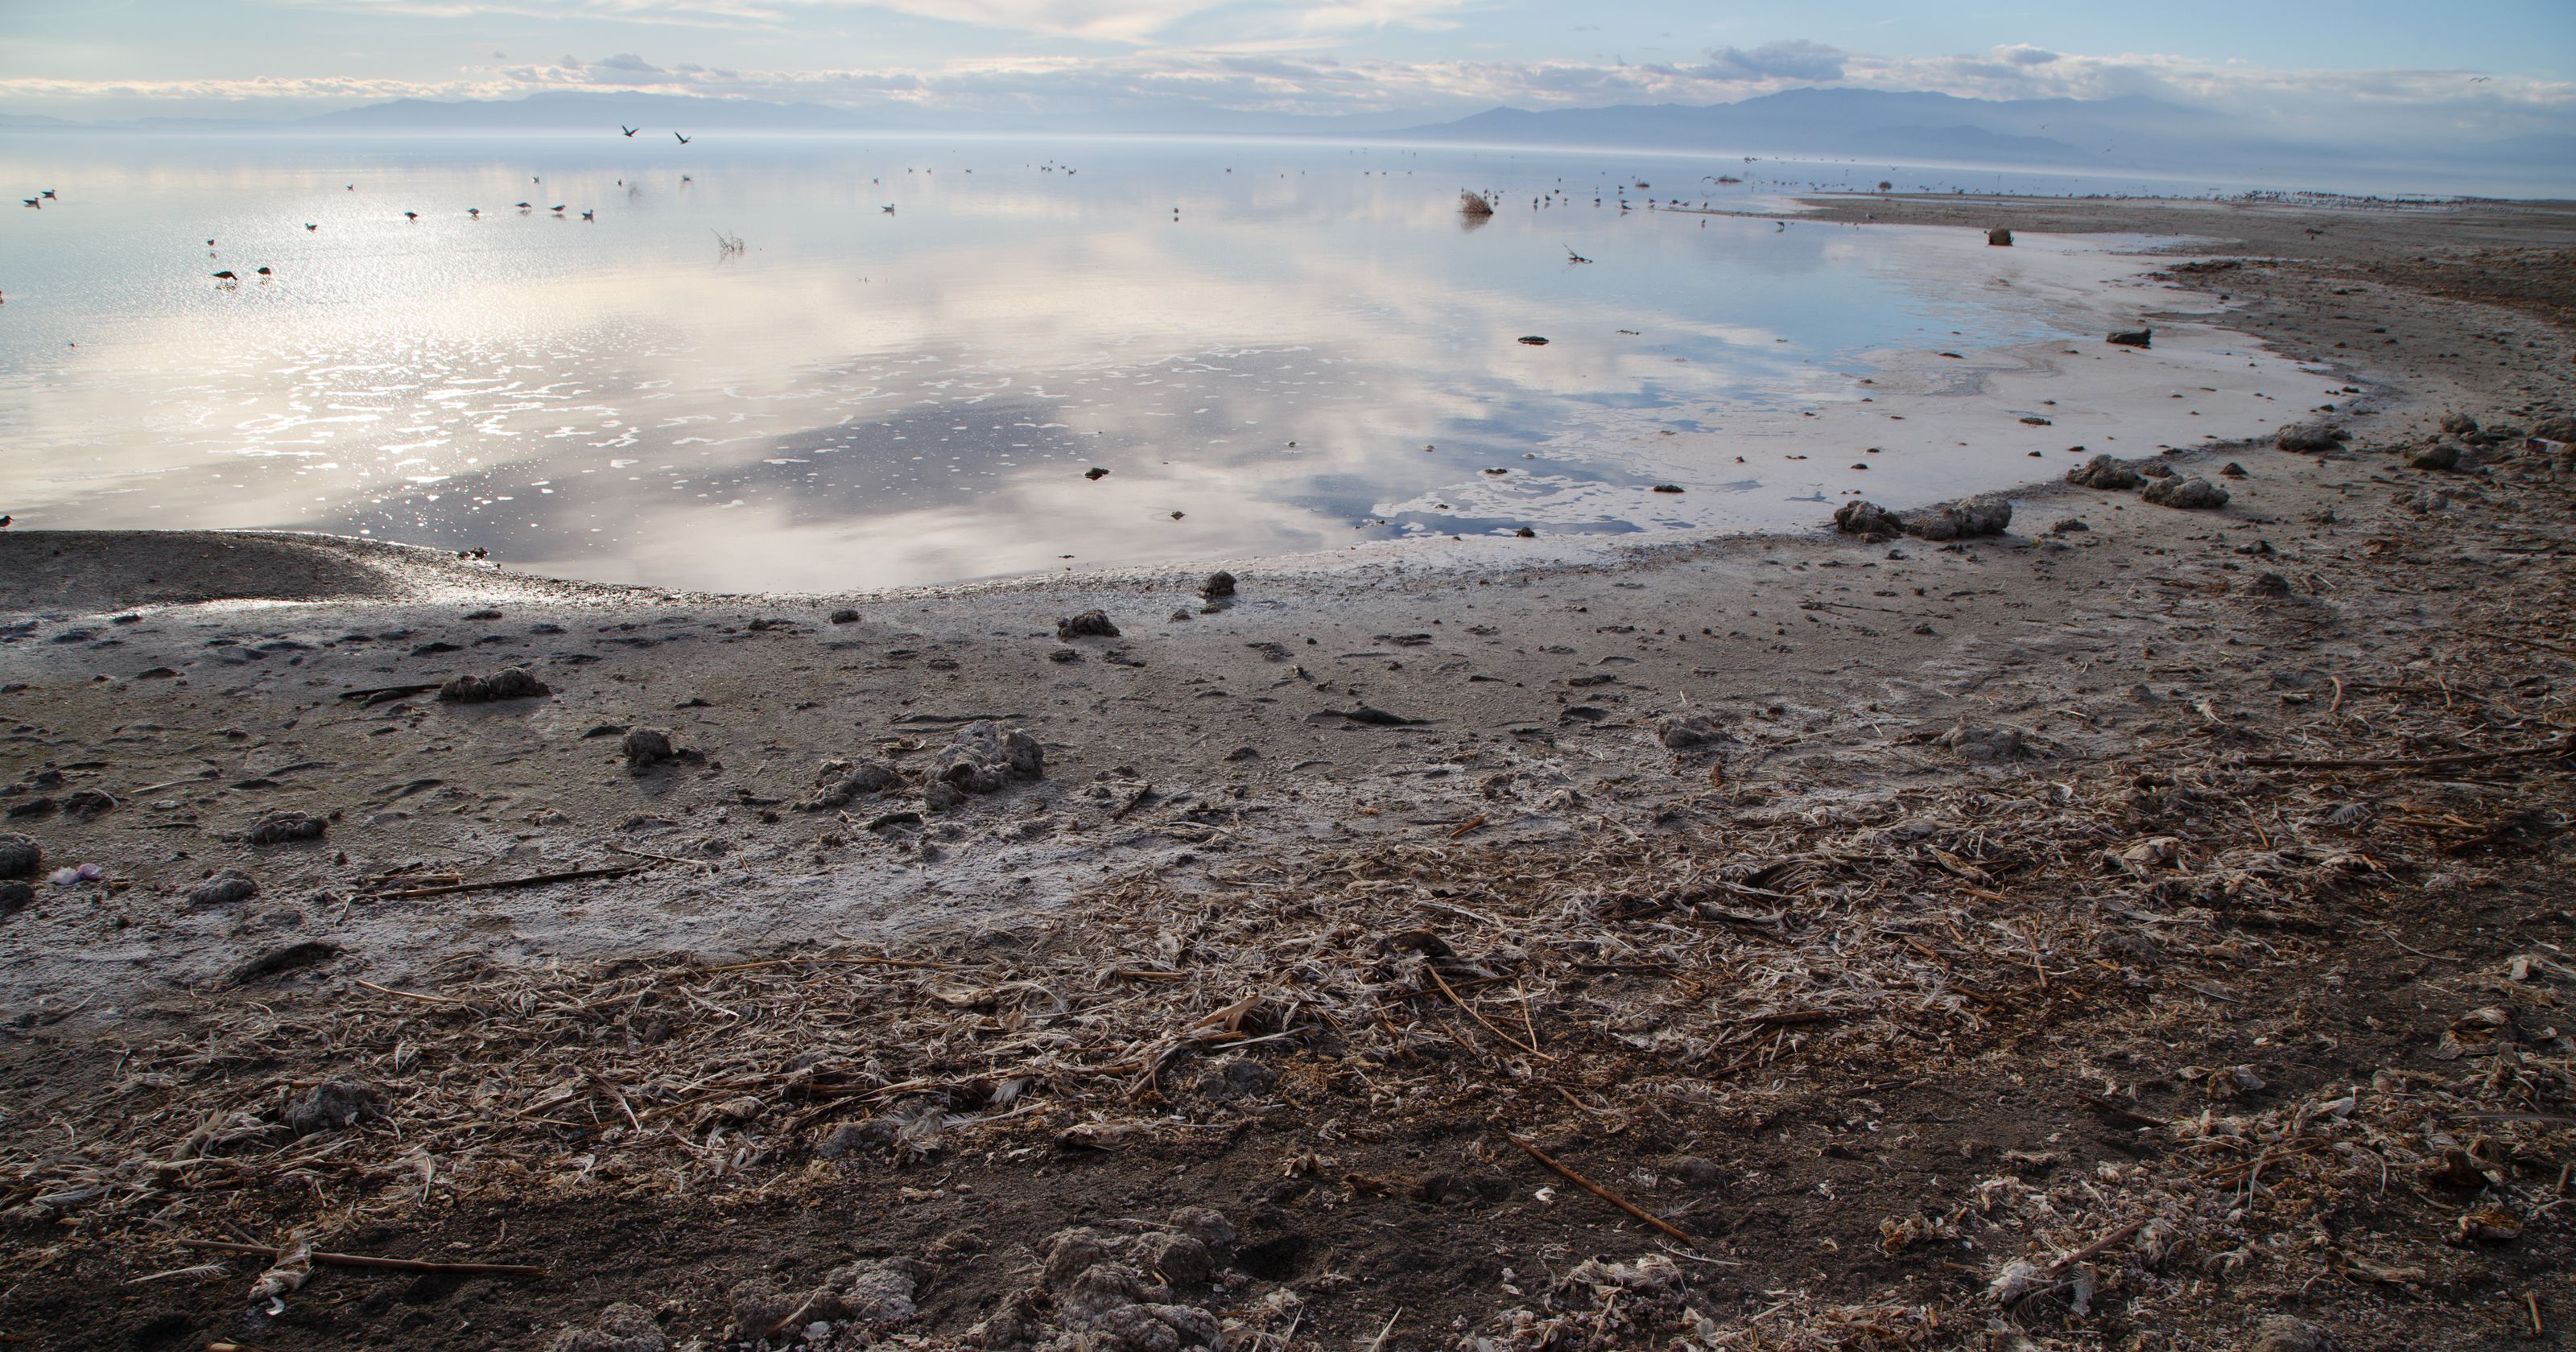 Negotiations toward a Salton Sea consensus are progressing, water ...